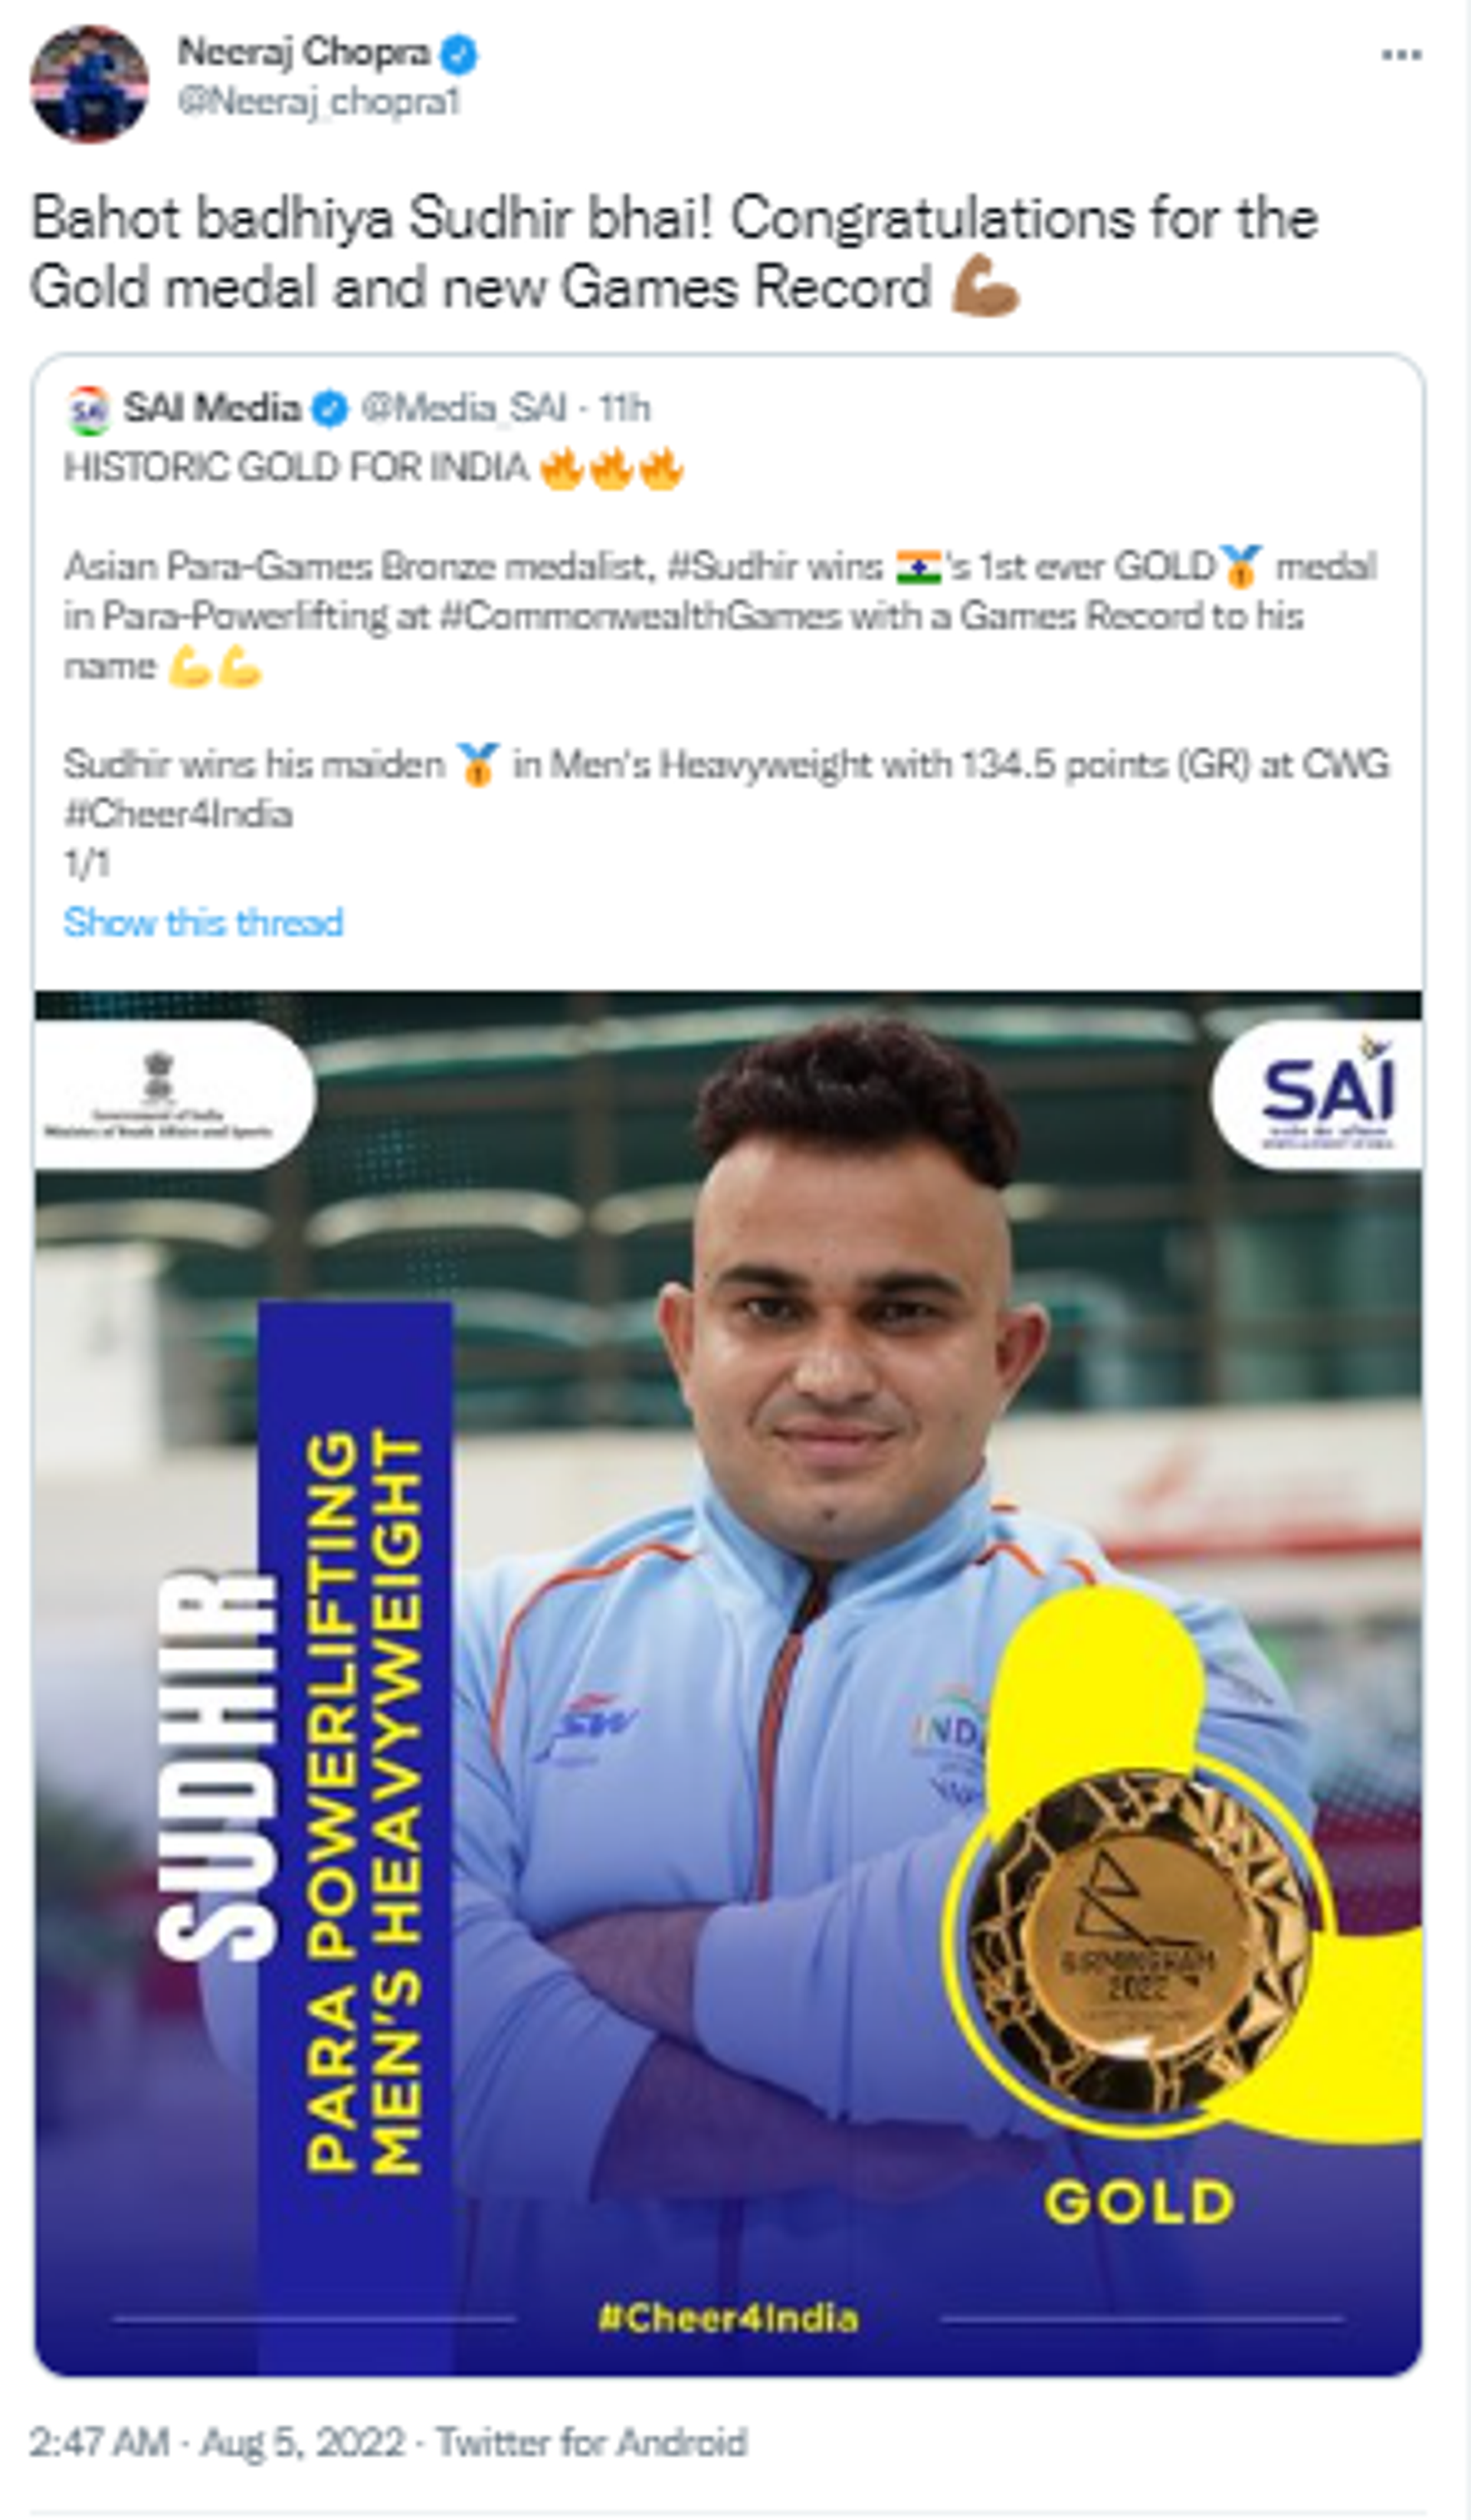 Olympic Gold Medalist Neeraj Chopra Congratulates Sudhir for Gold Medal and New Games Record - Sputnik International, 1920, 05.08.2022